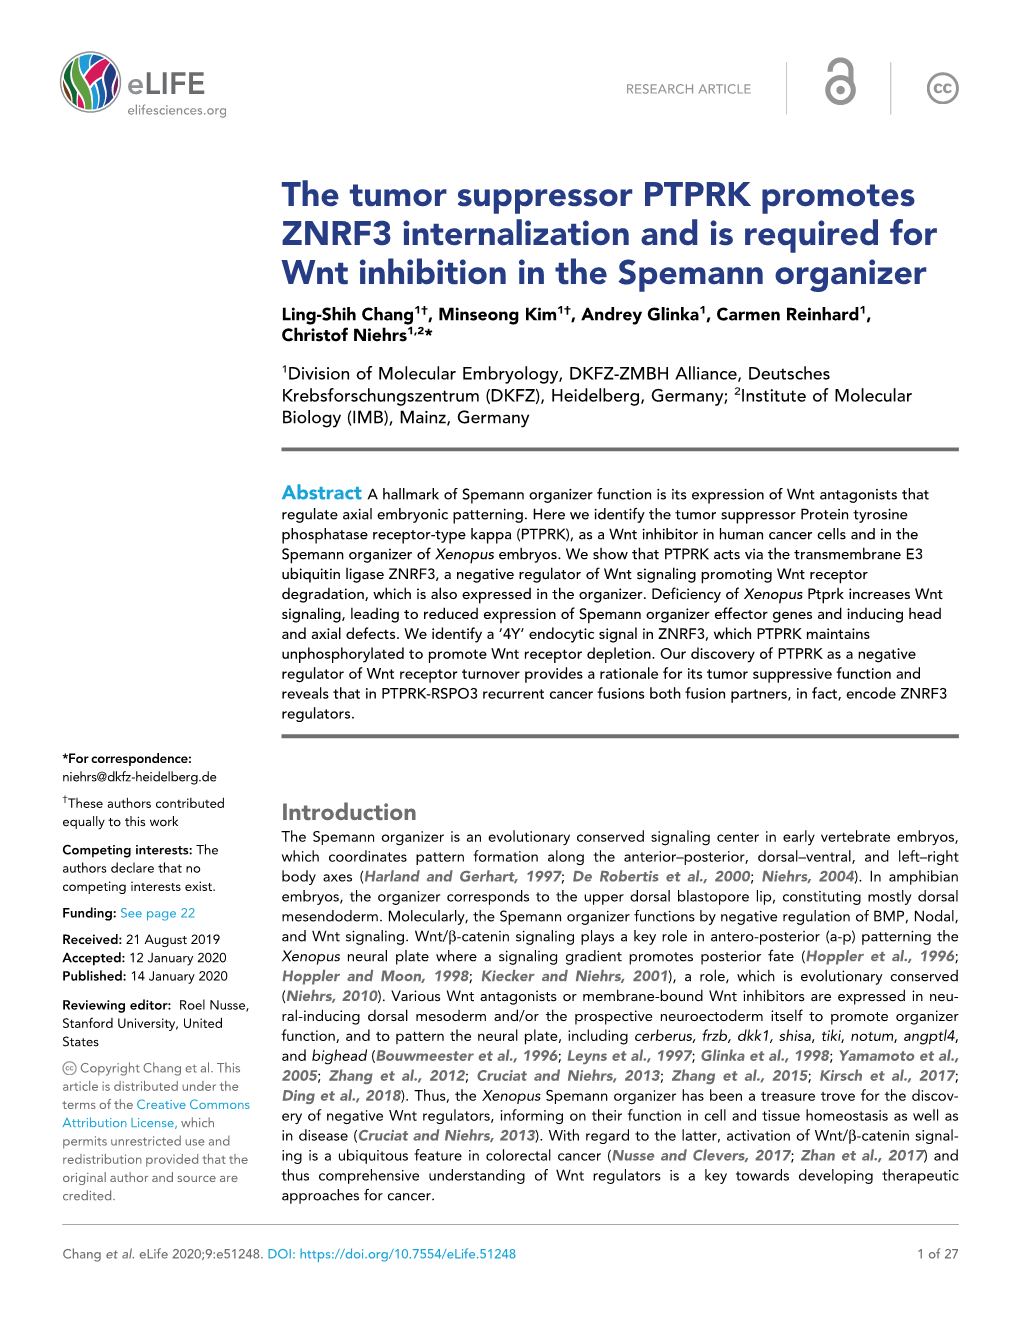 The Tumor Suppressor PTPRK Promotes ZNRF3 Internalization